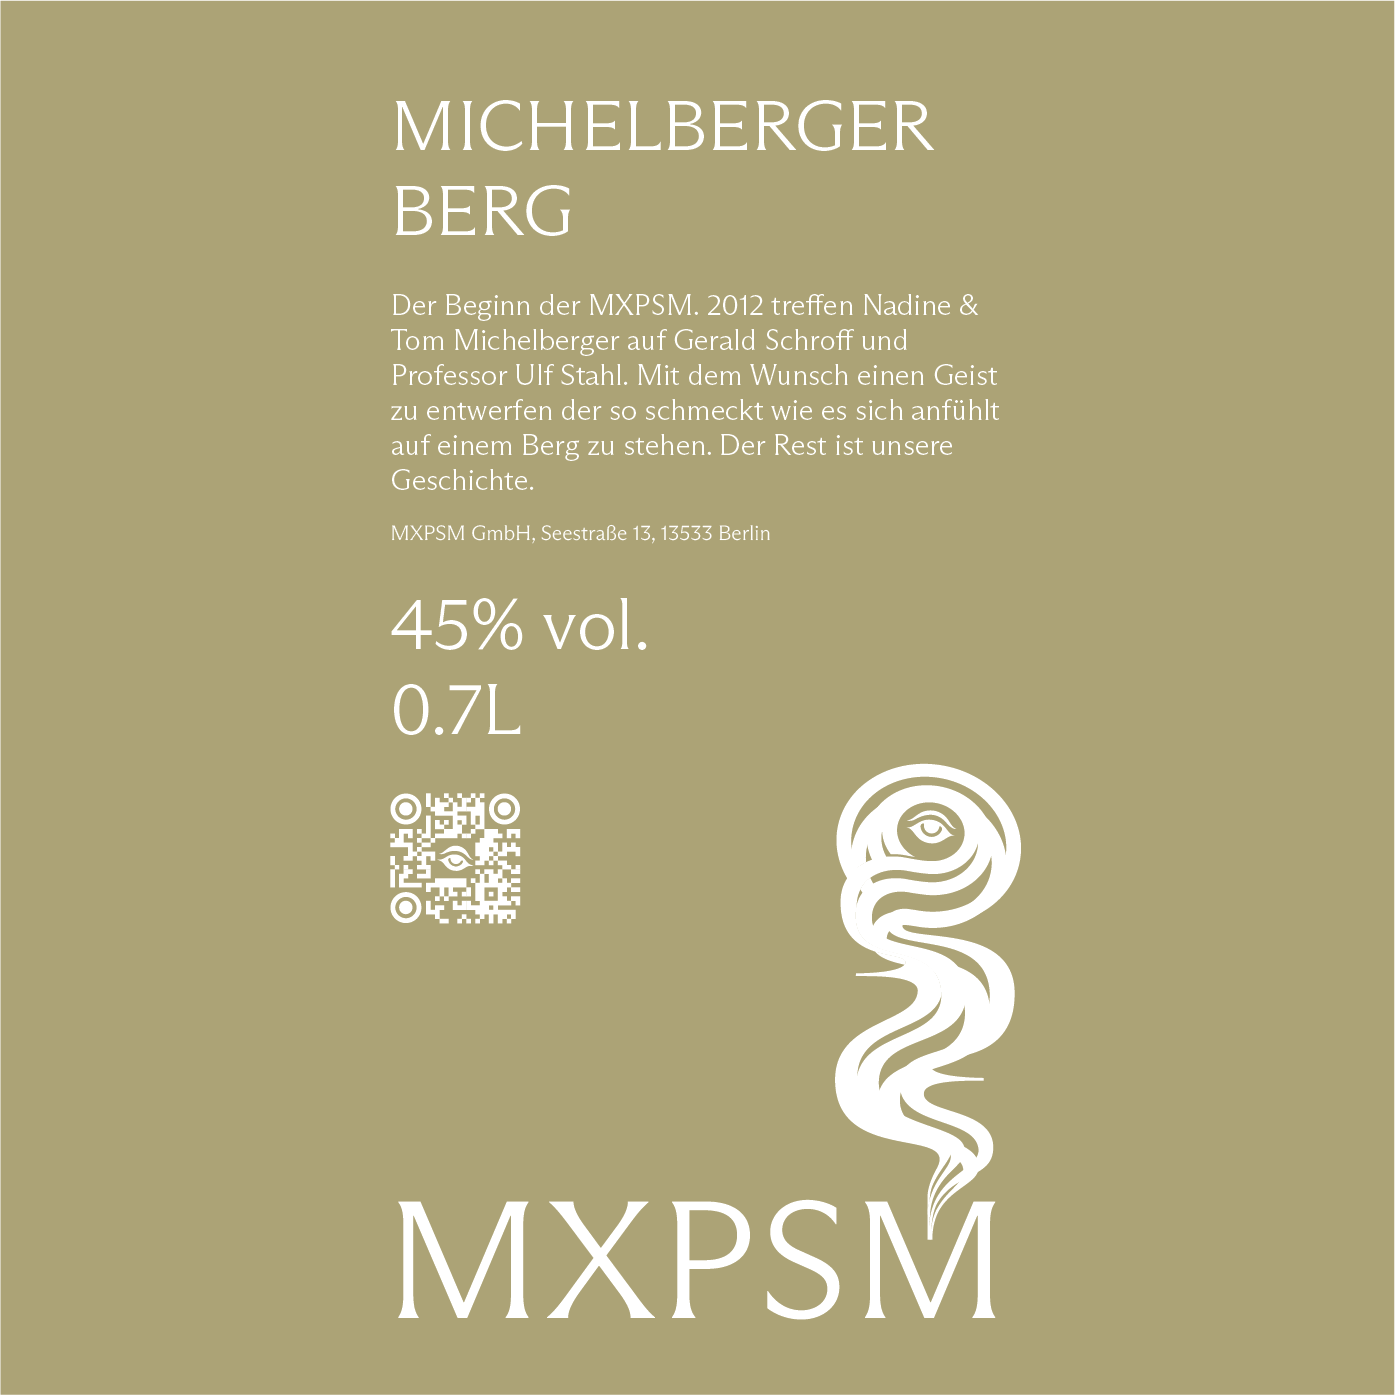 Michelberger Berg